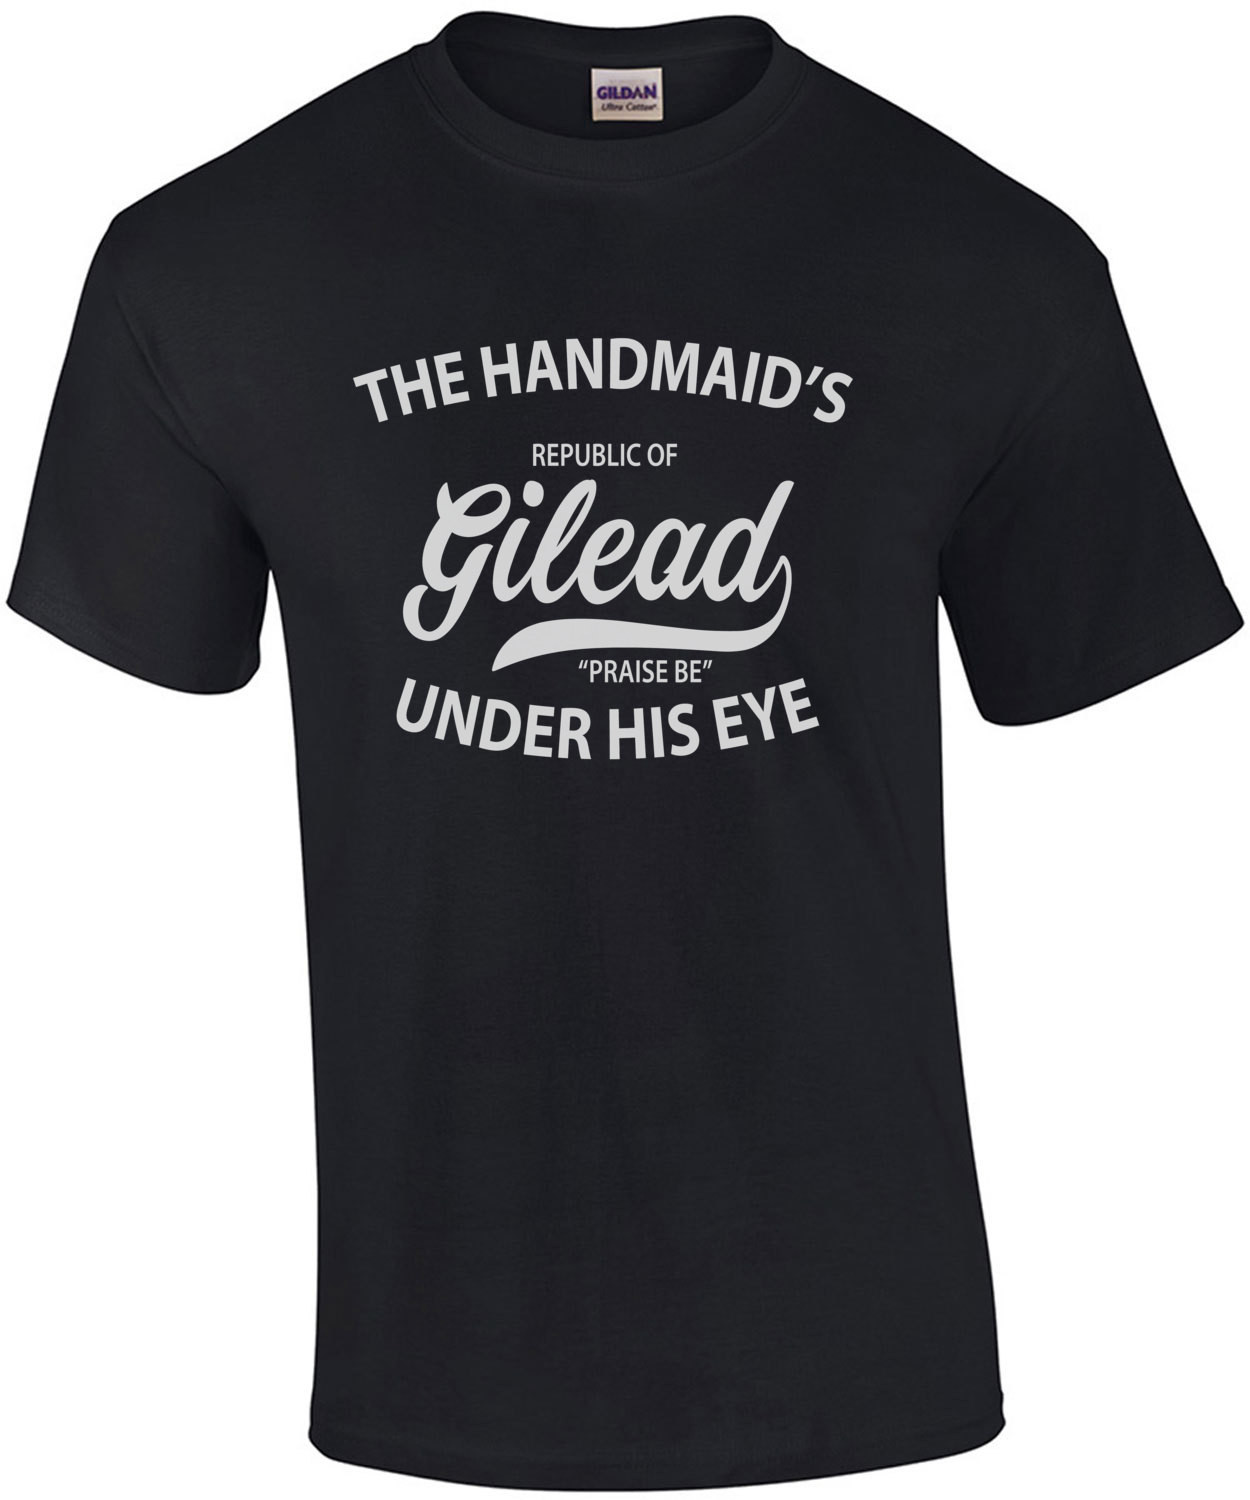 The handmaid's tale republic of Gilead "Praise me" Under his eye - The handmaid's tale t-shirt